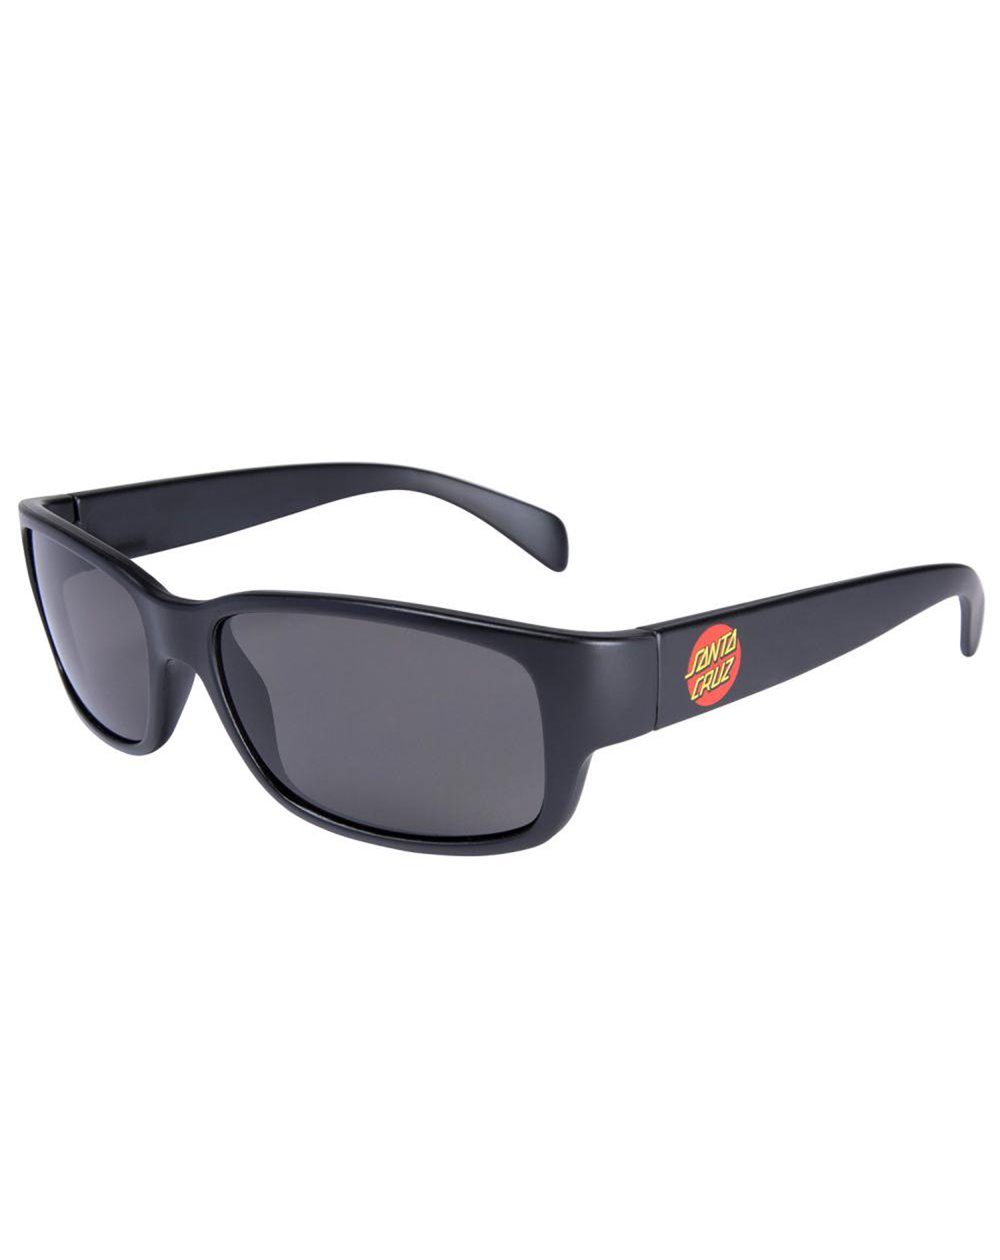 Santa Cruz Men's Sunglasses Classic Dot Black